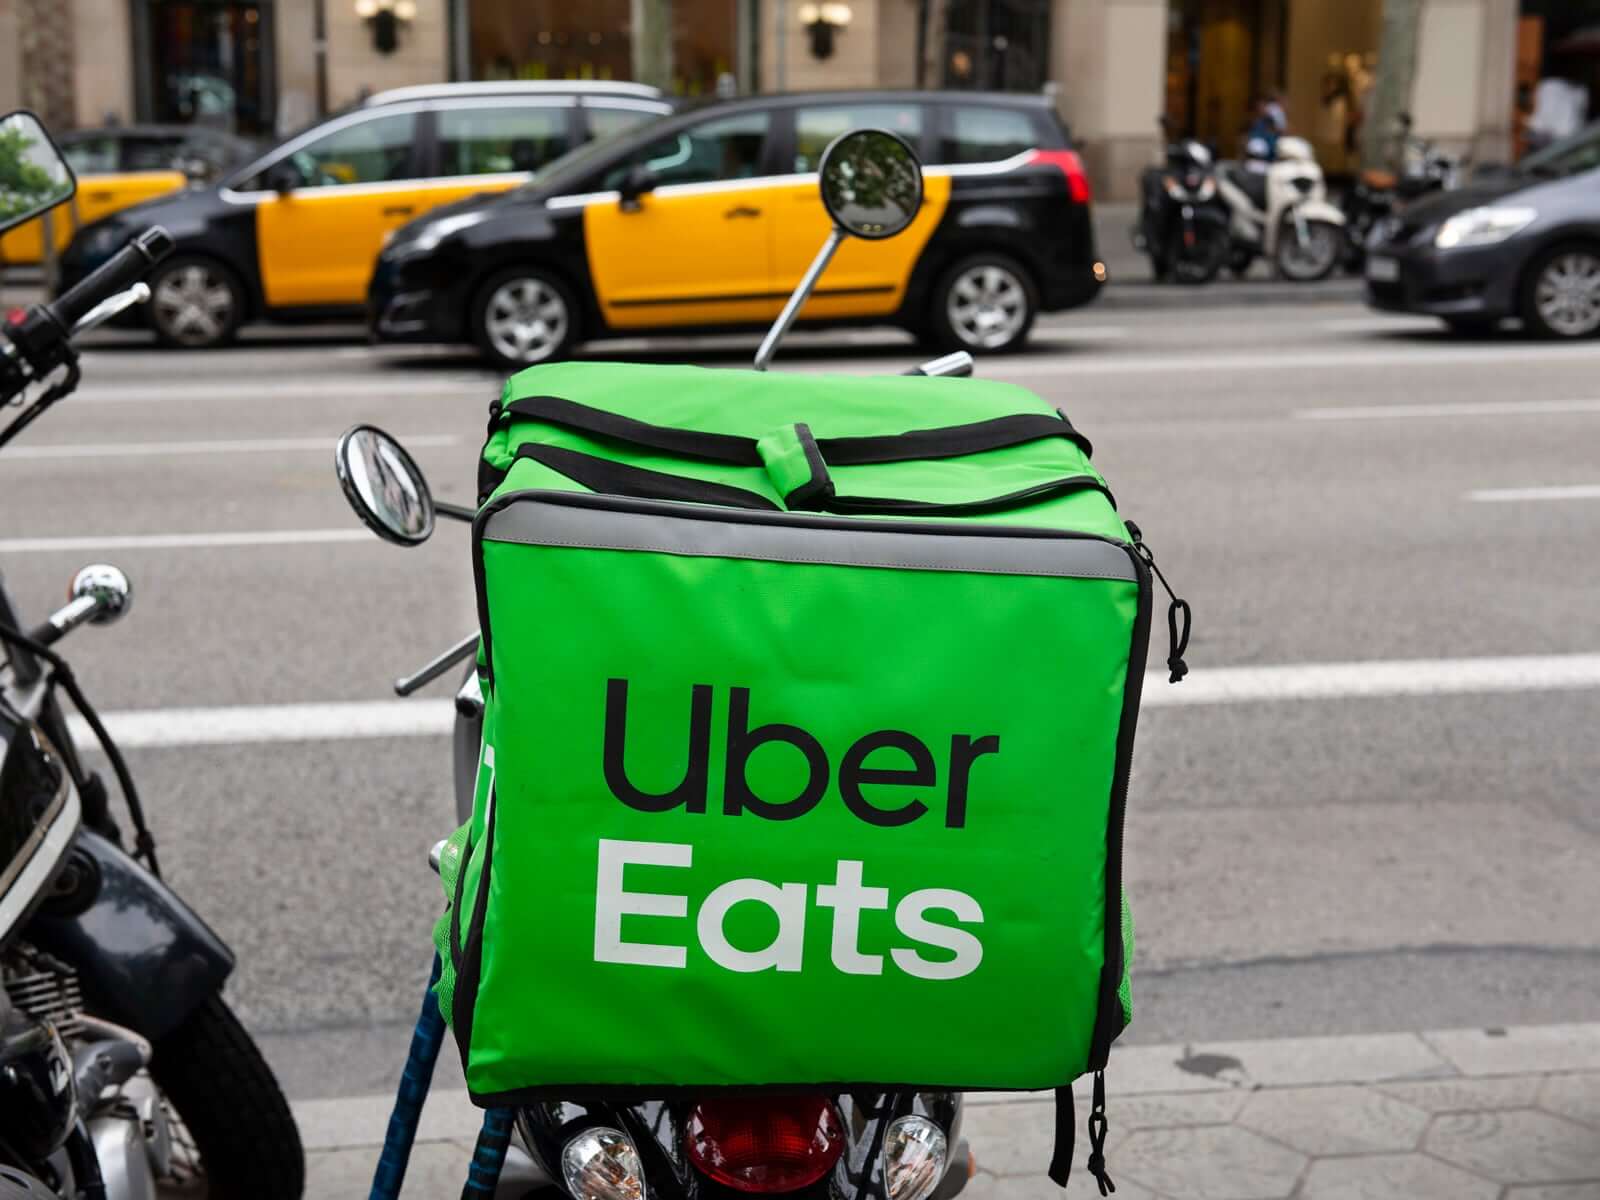 Uber suspends shared rides, tweaks Uber Eats to serve local communities better